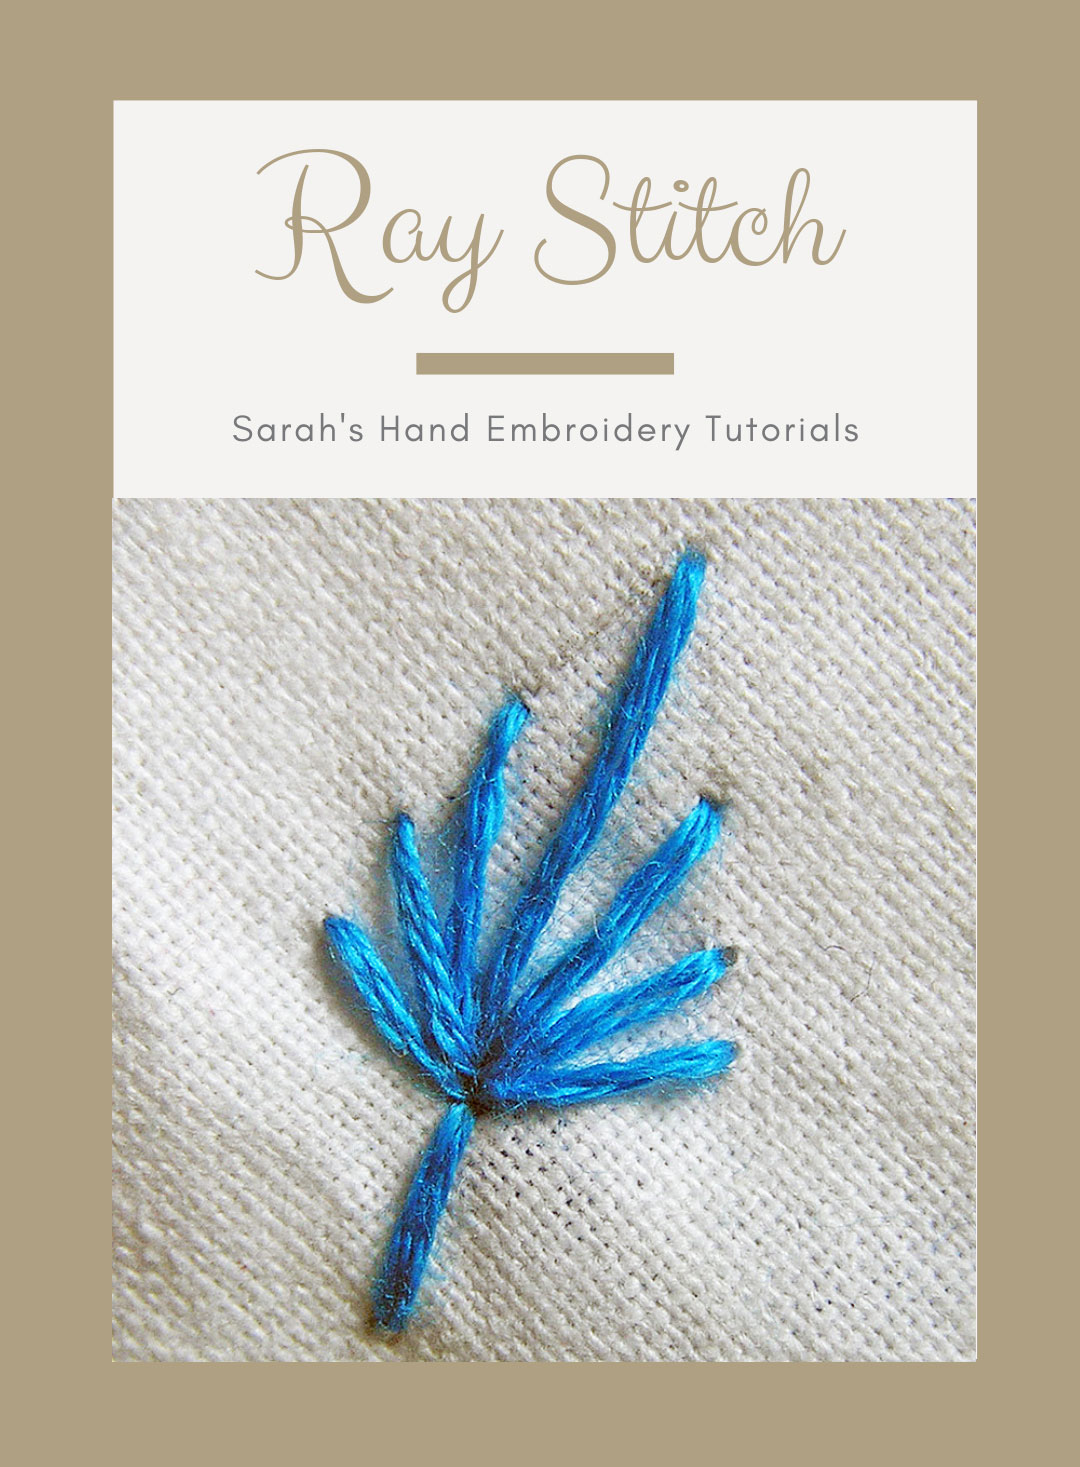 Needles - Sarah's Hand Embroidery Tutorials